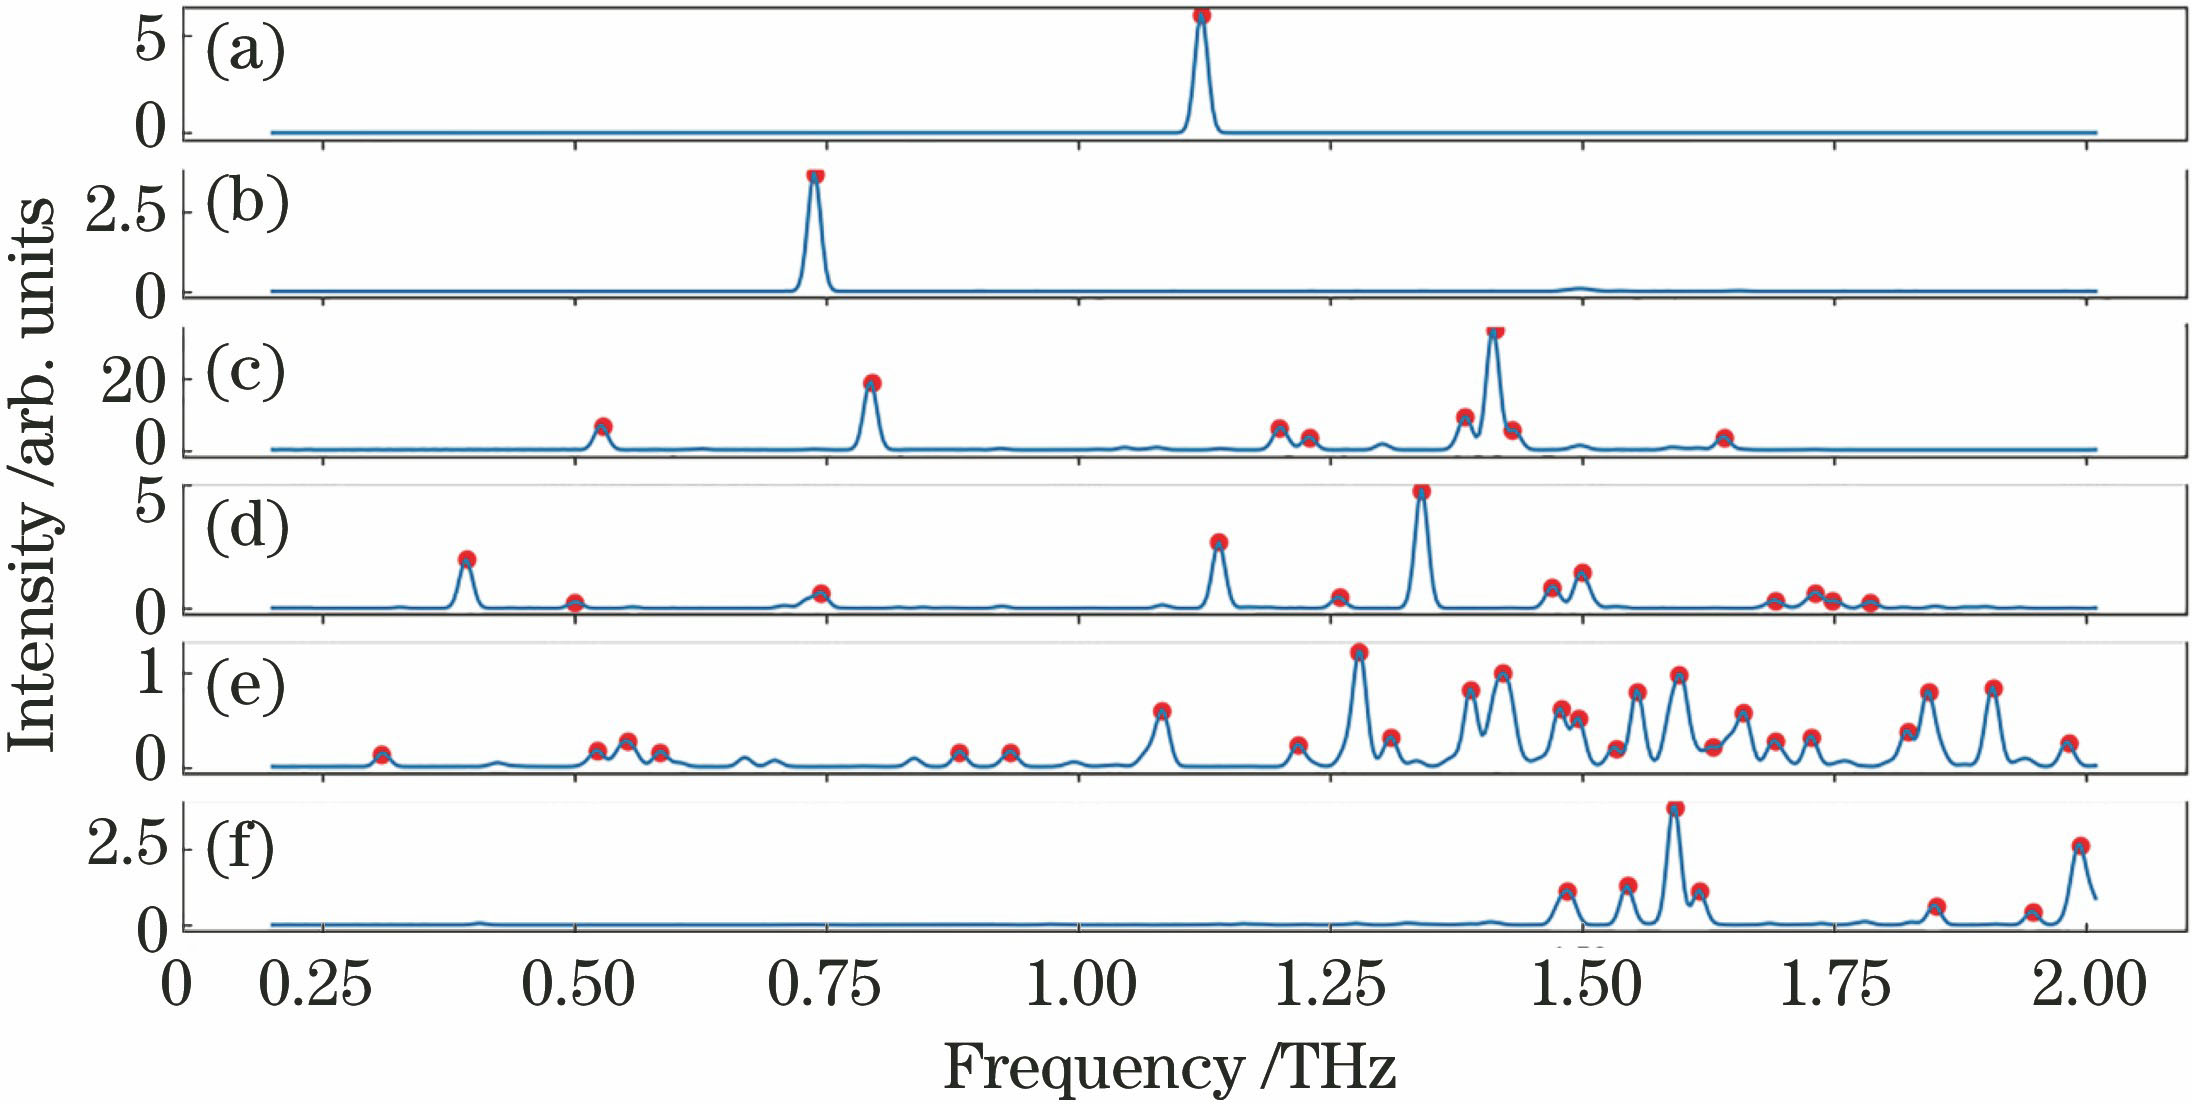 Simulated terahertz spectroscopy of six water clusters. (a) (H2O)4 theoretical terahertz spectroscopy; (b) (H2O)5 theoretical terahertz spectroscopy; (c) (H2O)6 theoretical terahertz spectroscopy; (d) (H2O)7 theoretical terahertz spectroscopy; (e) (H2O)8 theoretical terahertz spectroscopy; (f) (H2O)9 theoretical terahertz spectroscopy